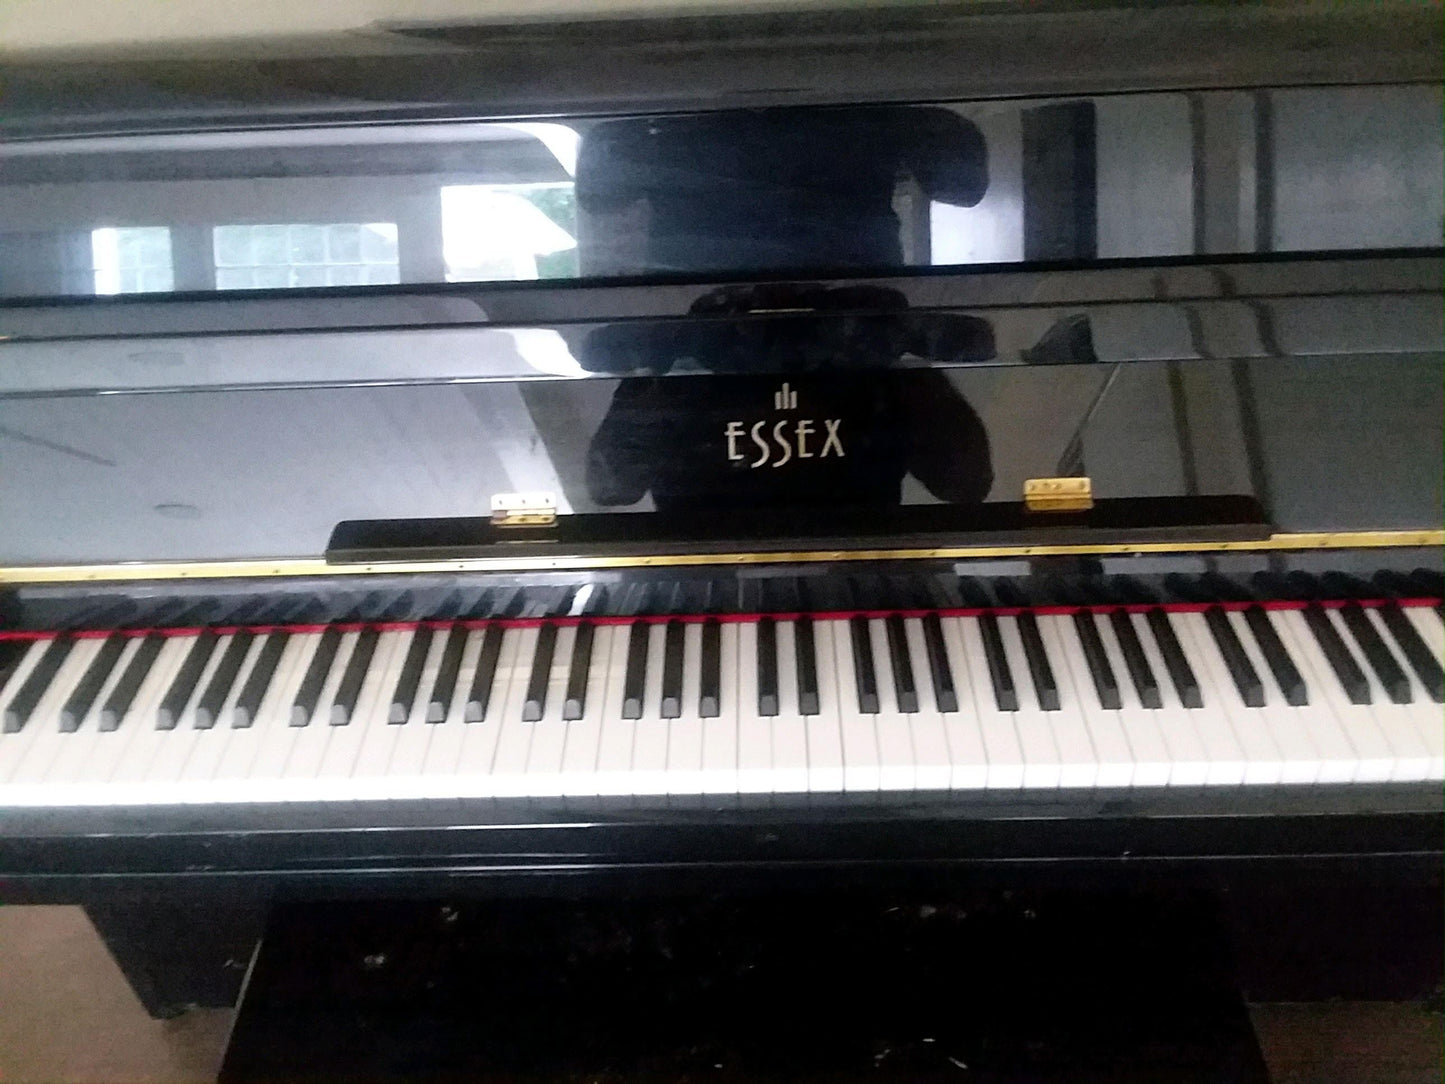 Essex Upright Piano 2006